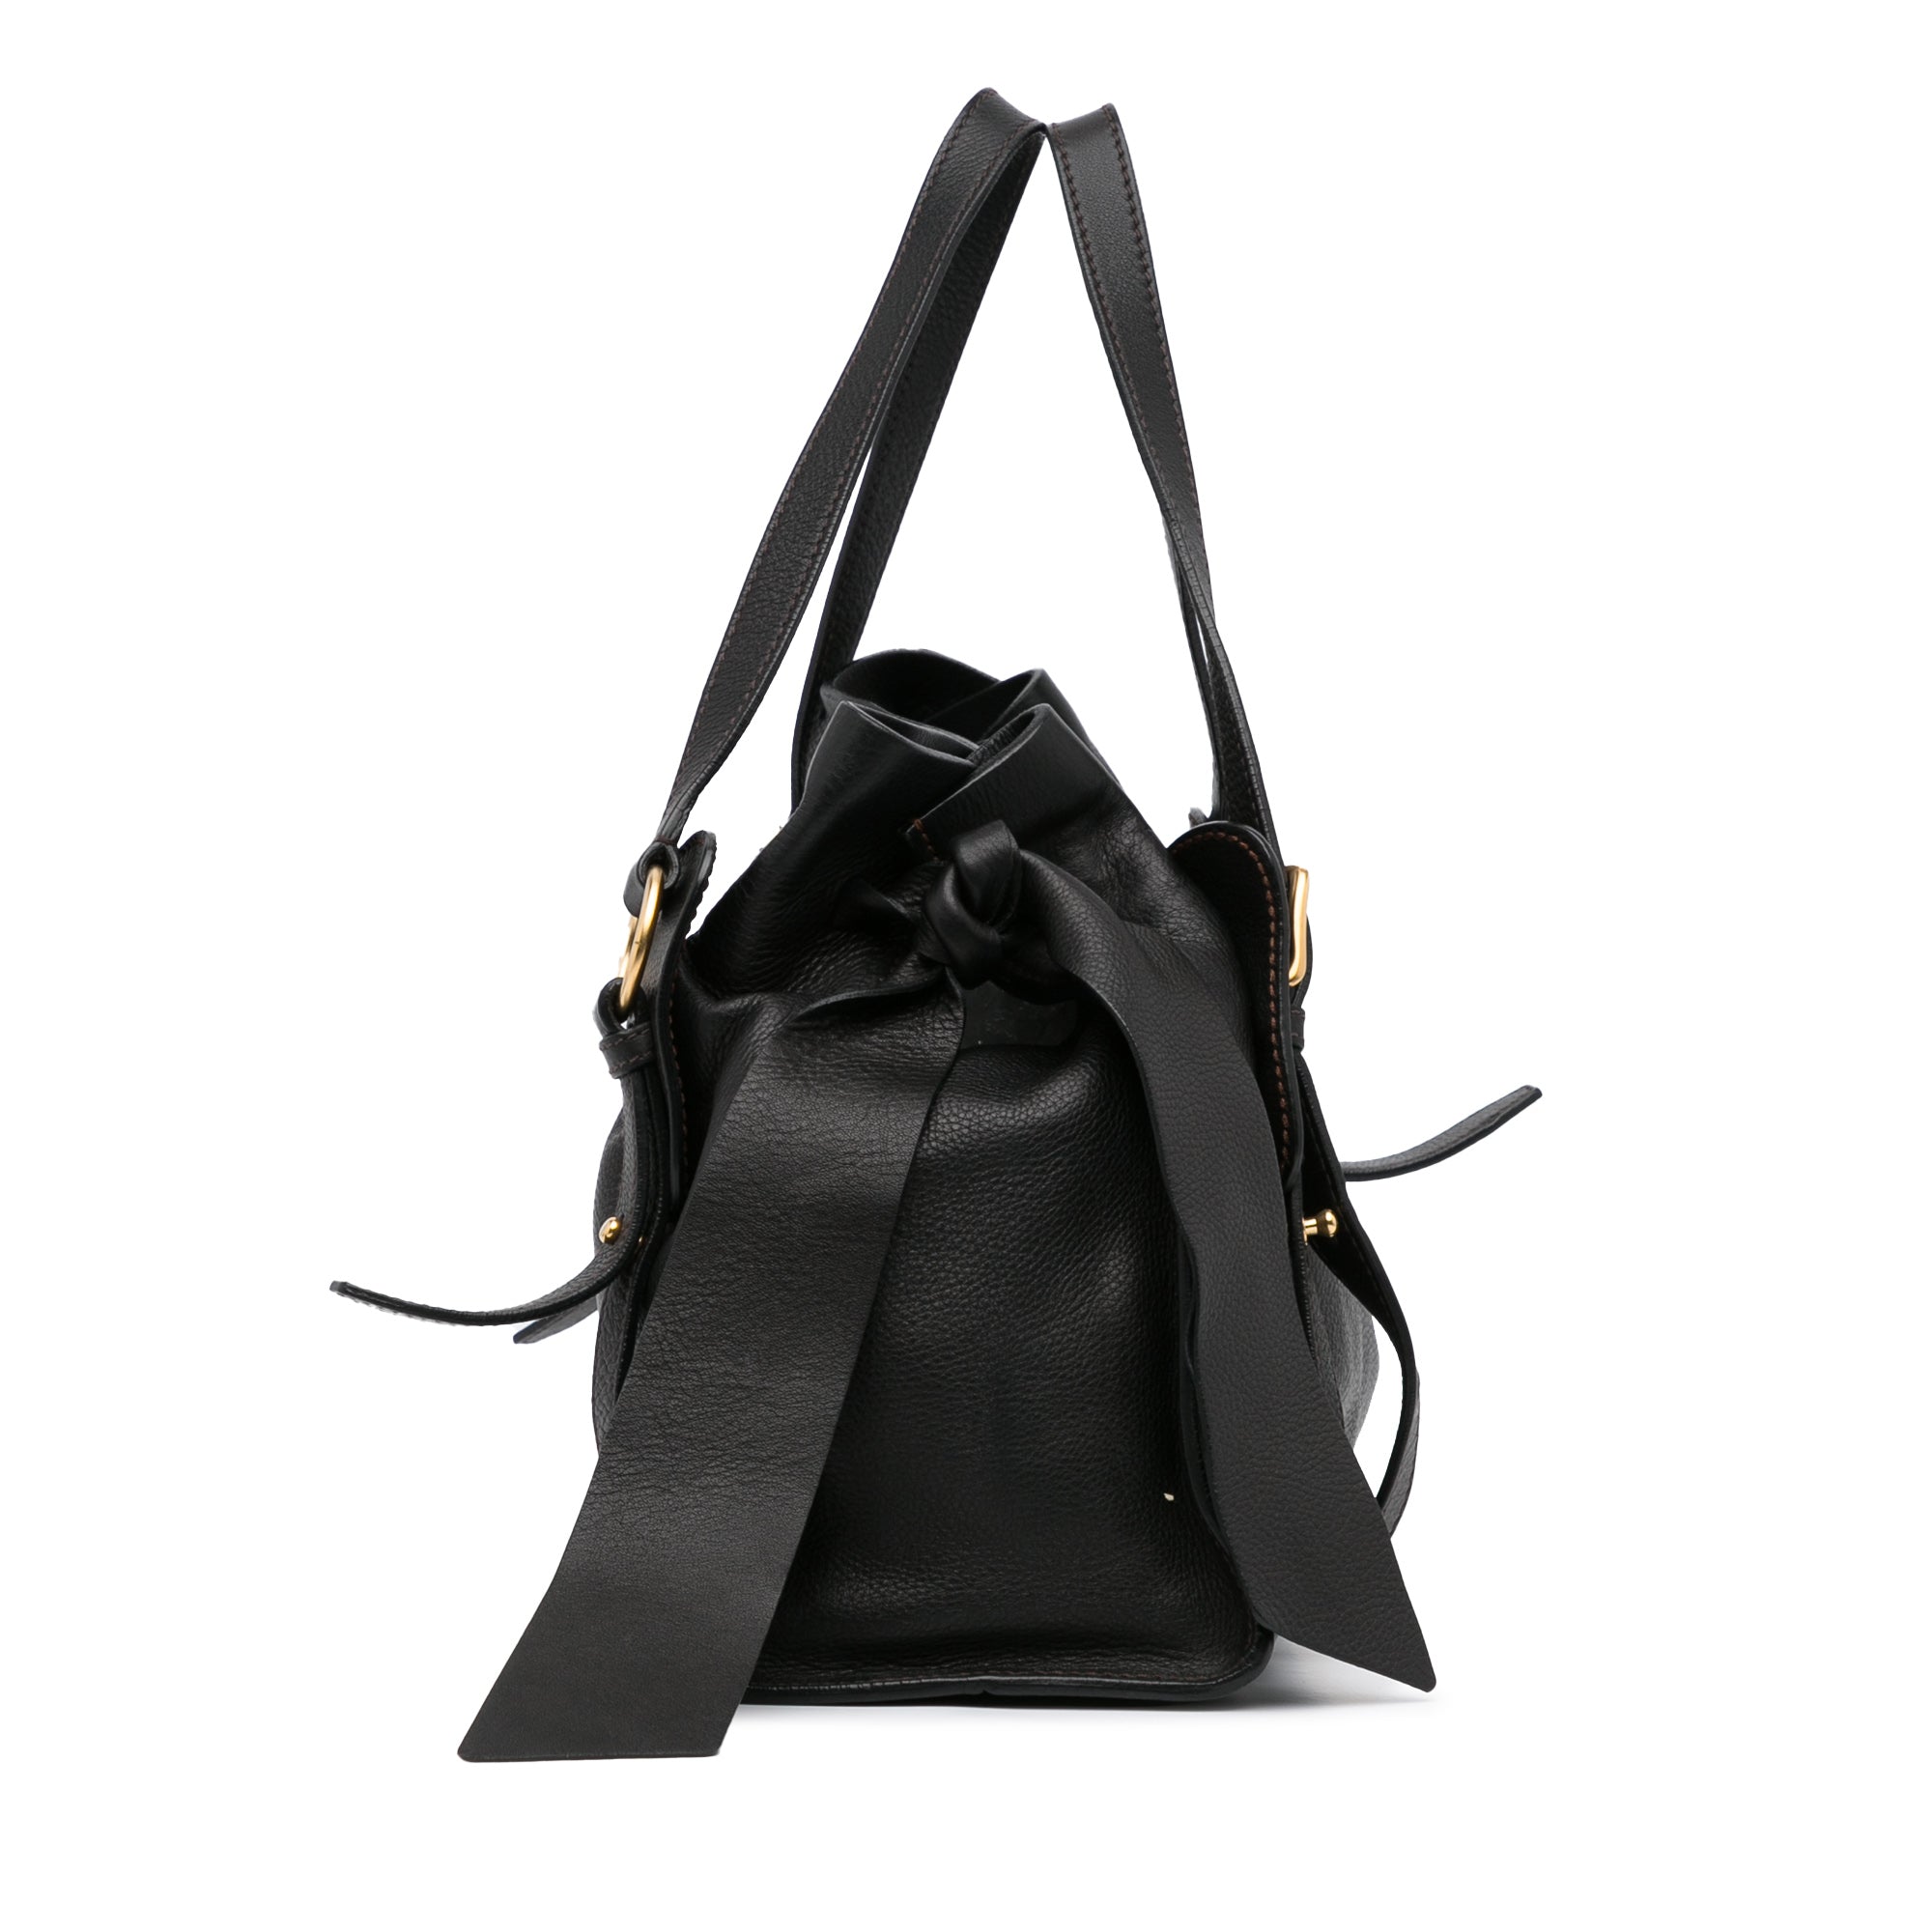 Miu Miu Tote Bag Black Leather